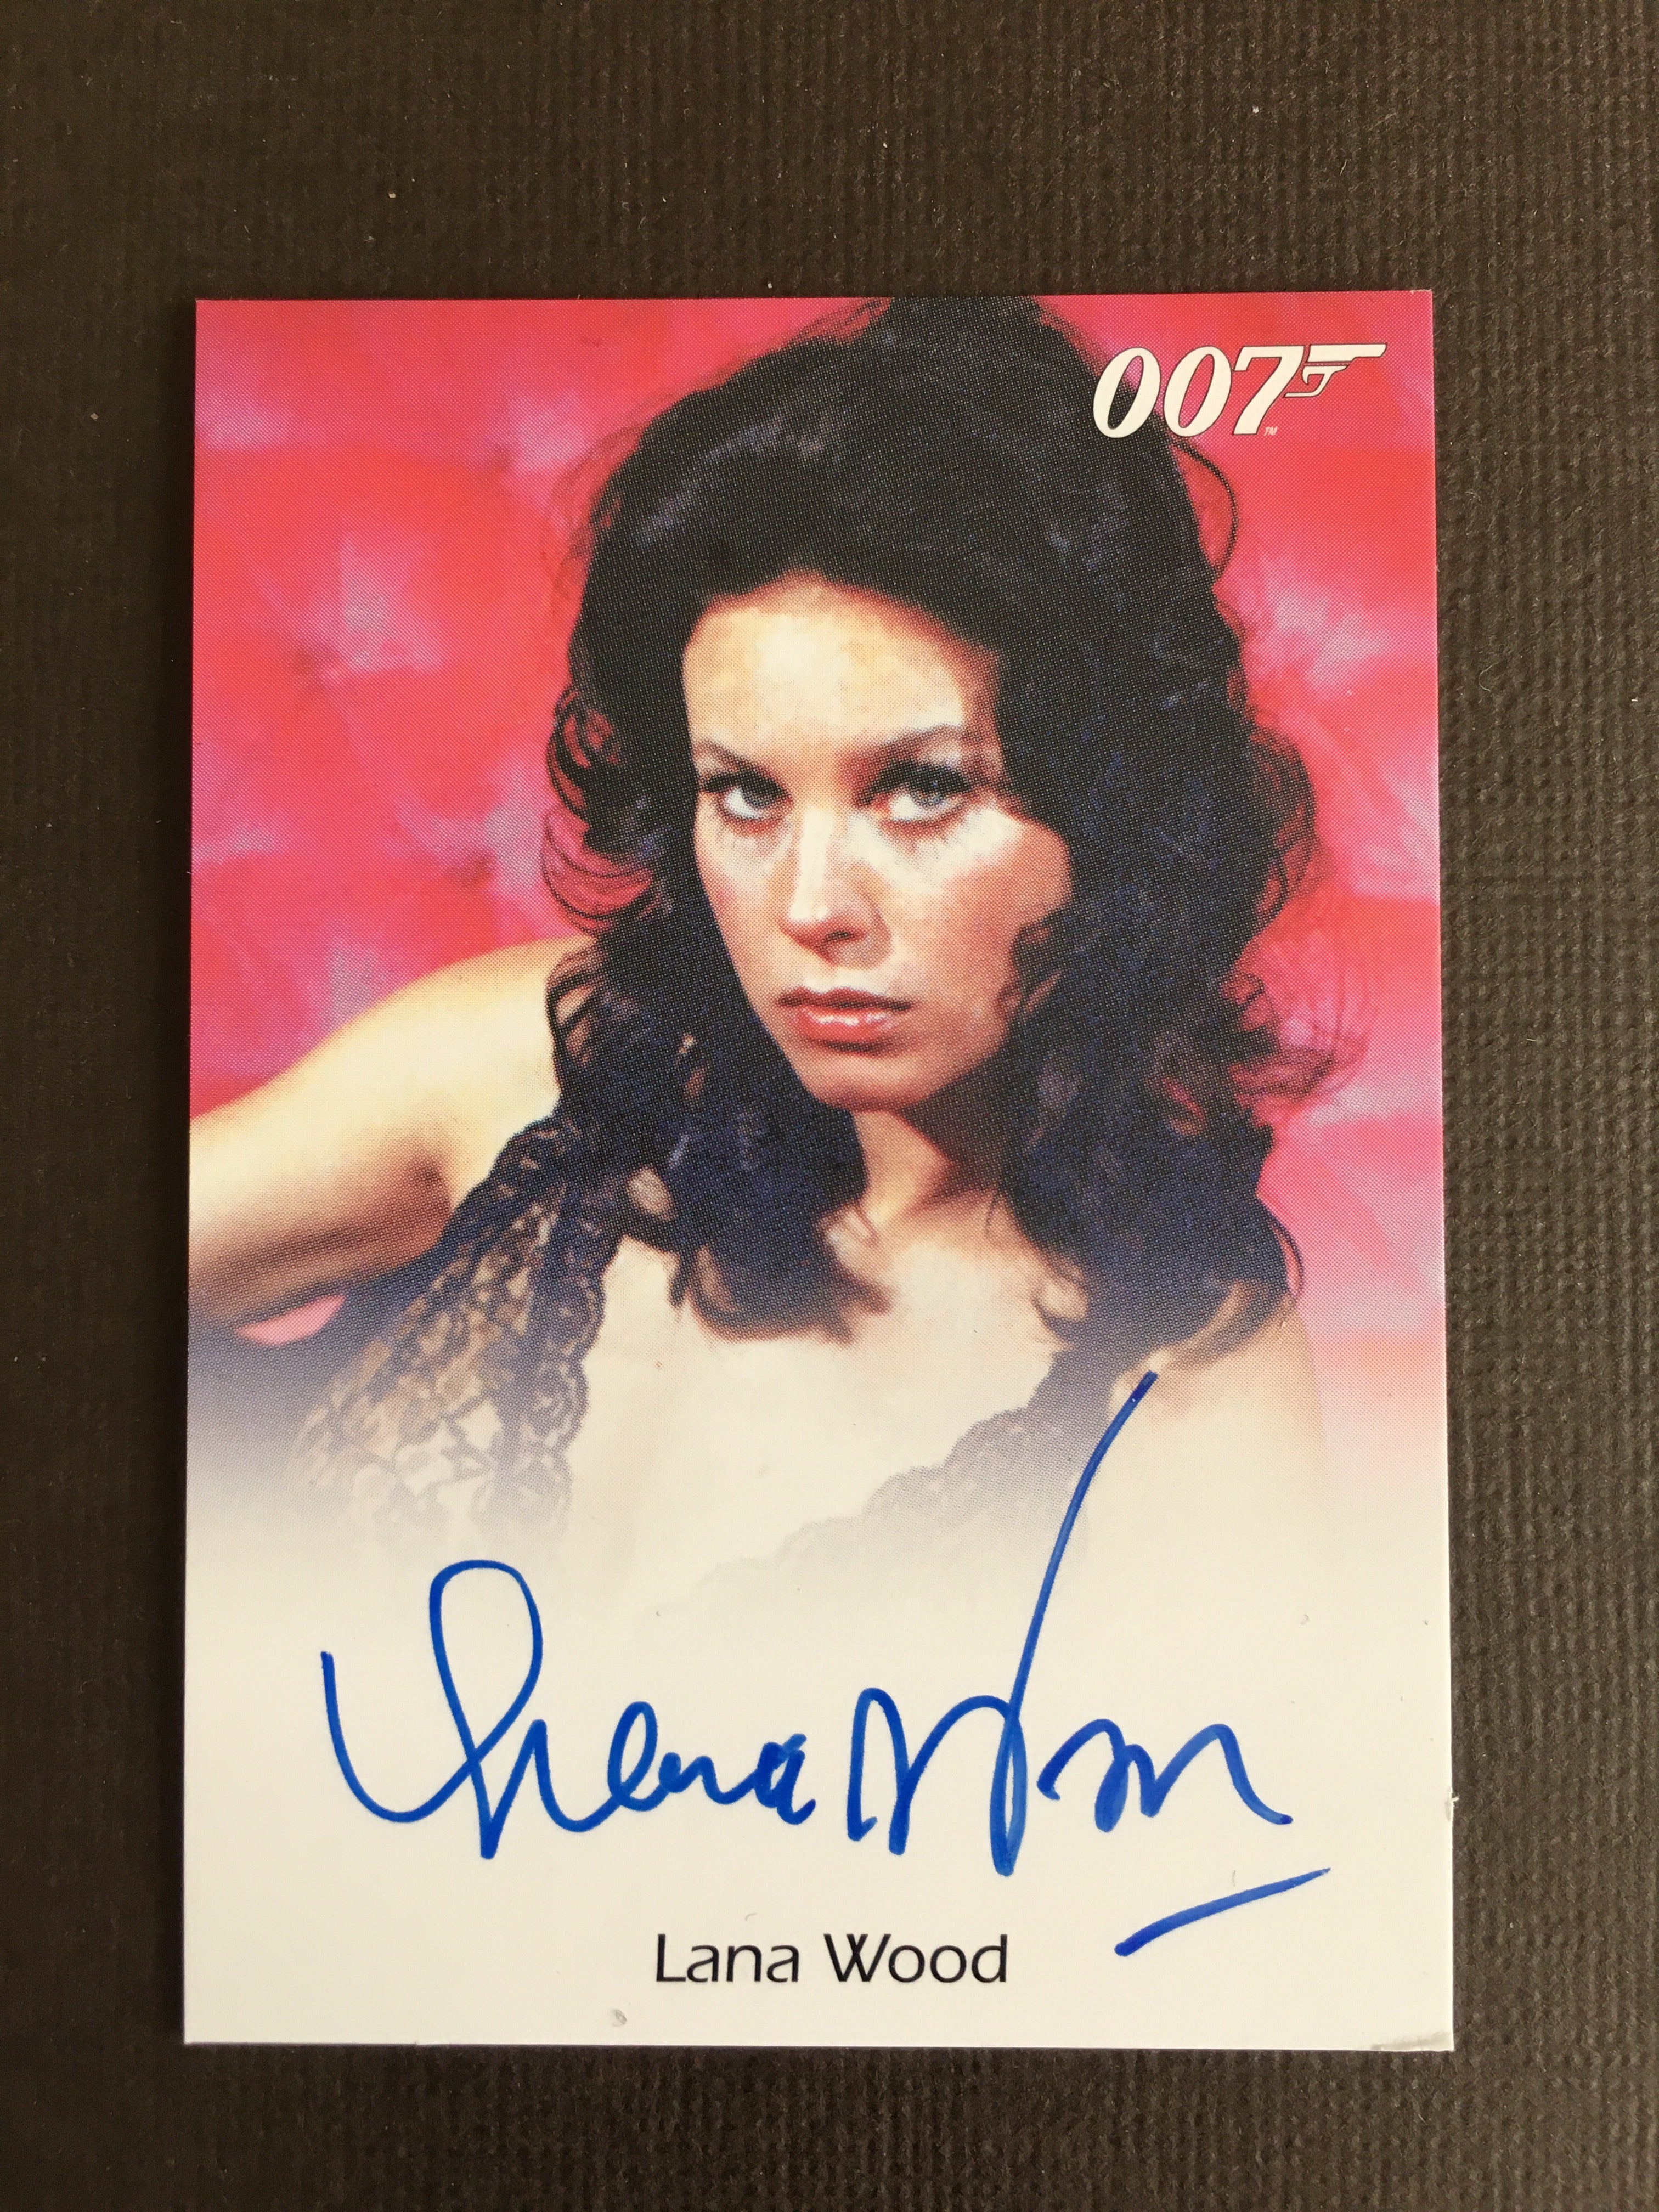 James Bond Autograph Card (Lana Wood) - Limited & Rare Trading Card